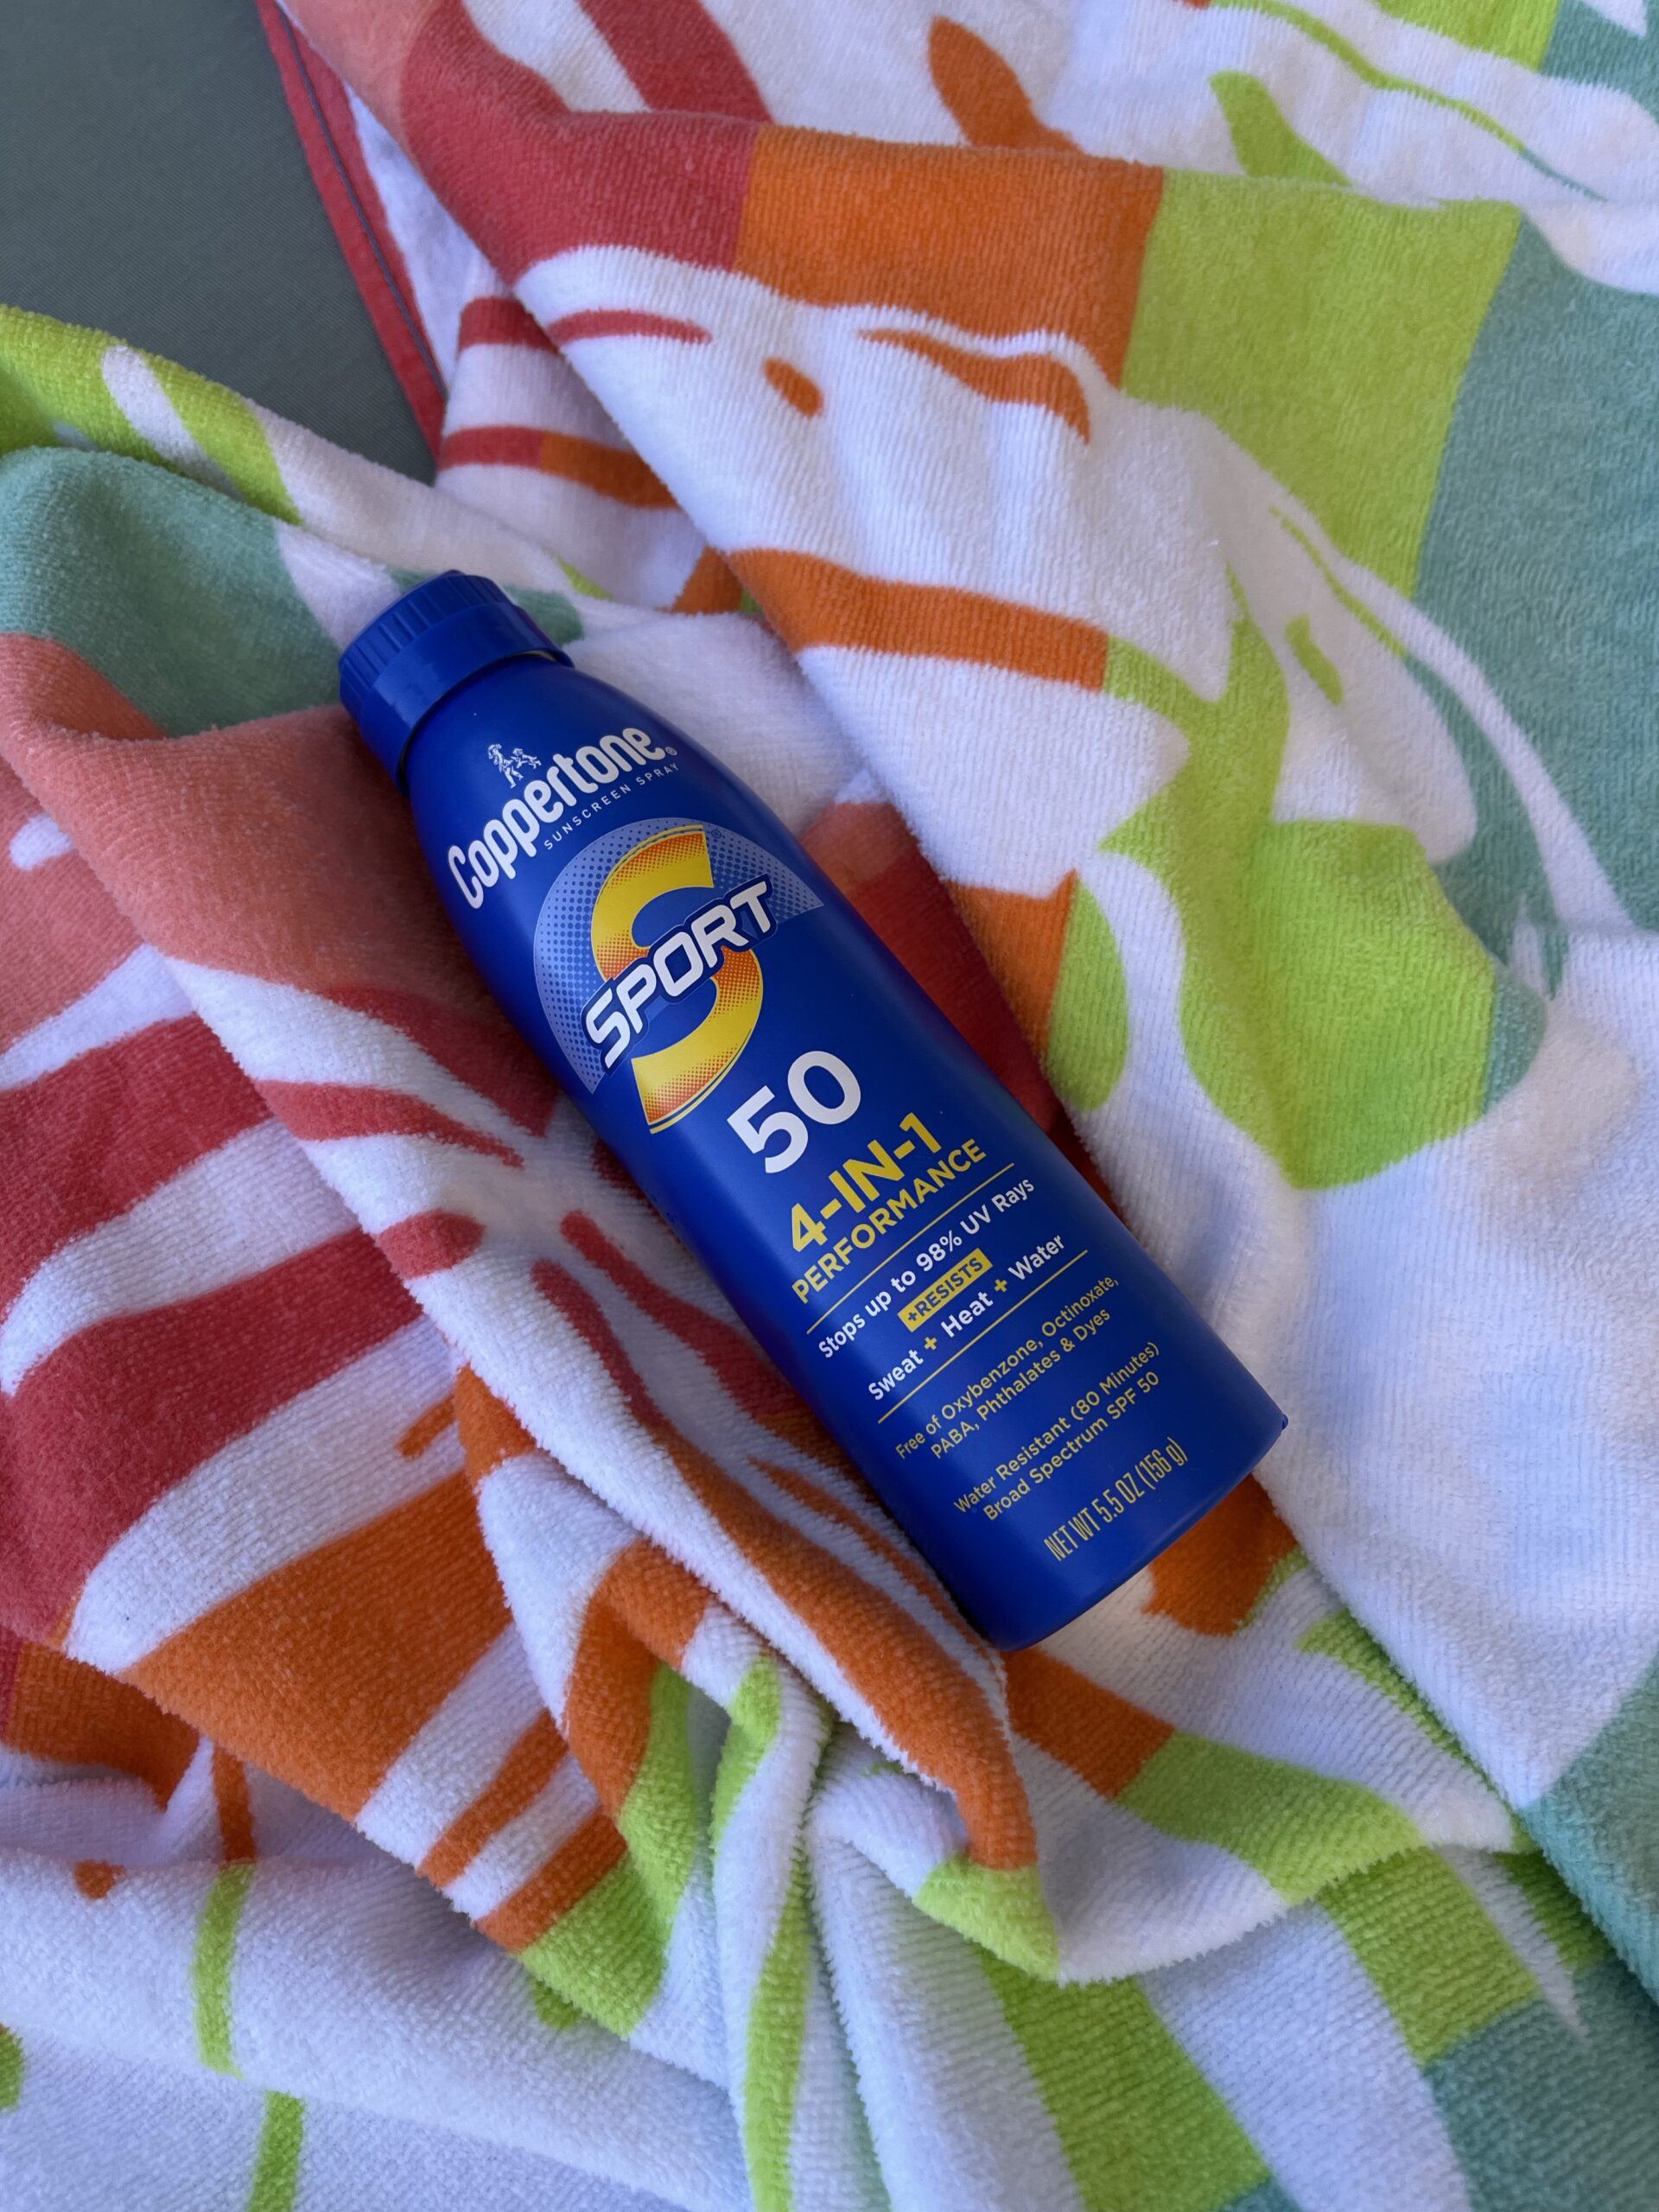 Coppertone Sport SPF 50 4-in-1 sunscreen bottle